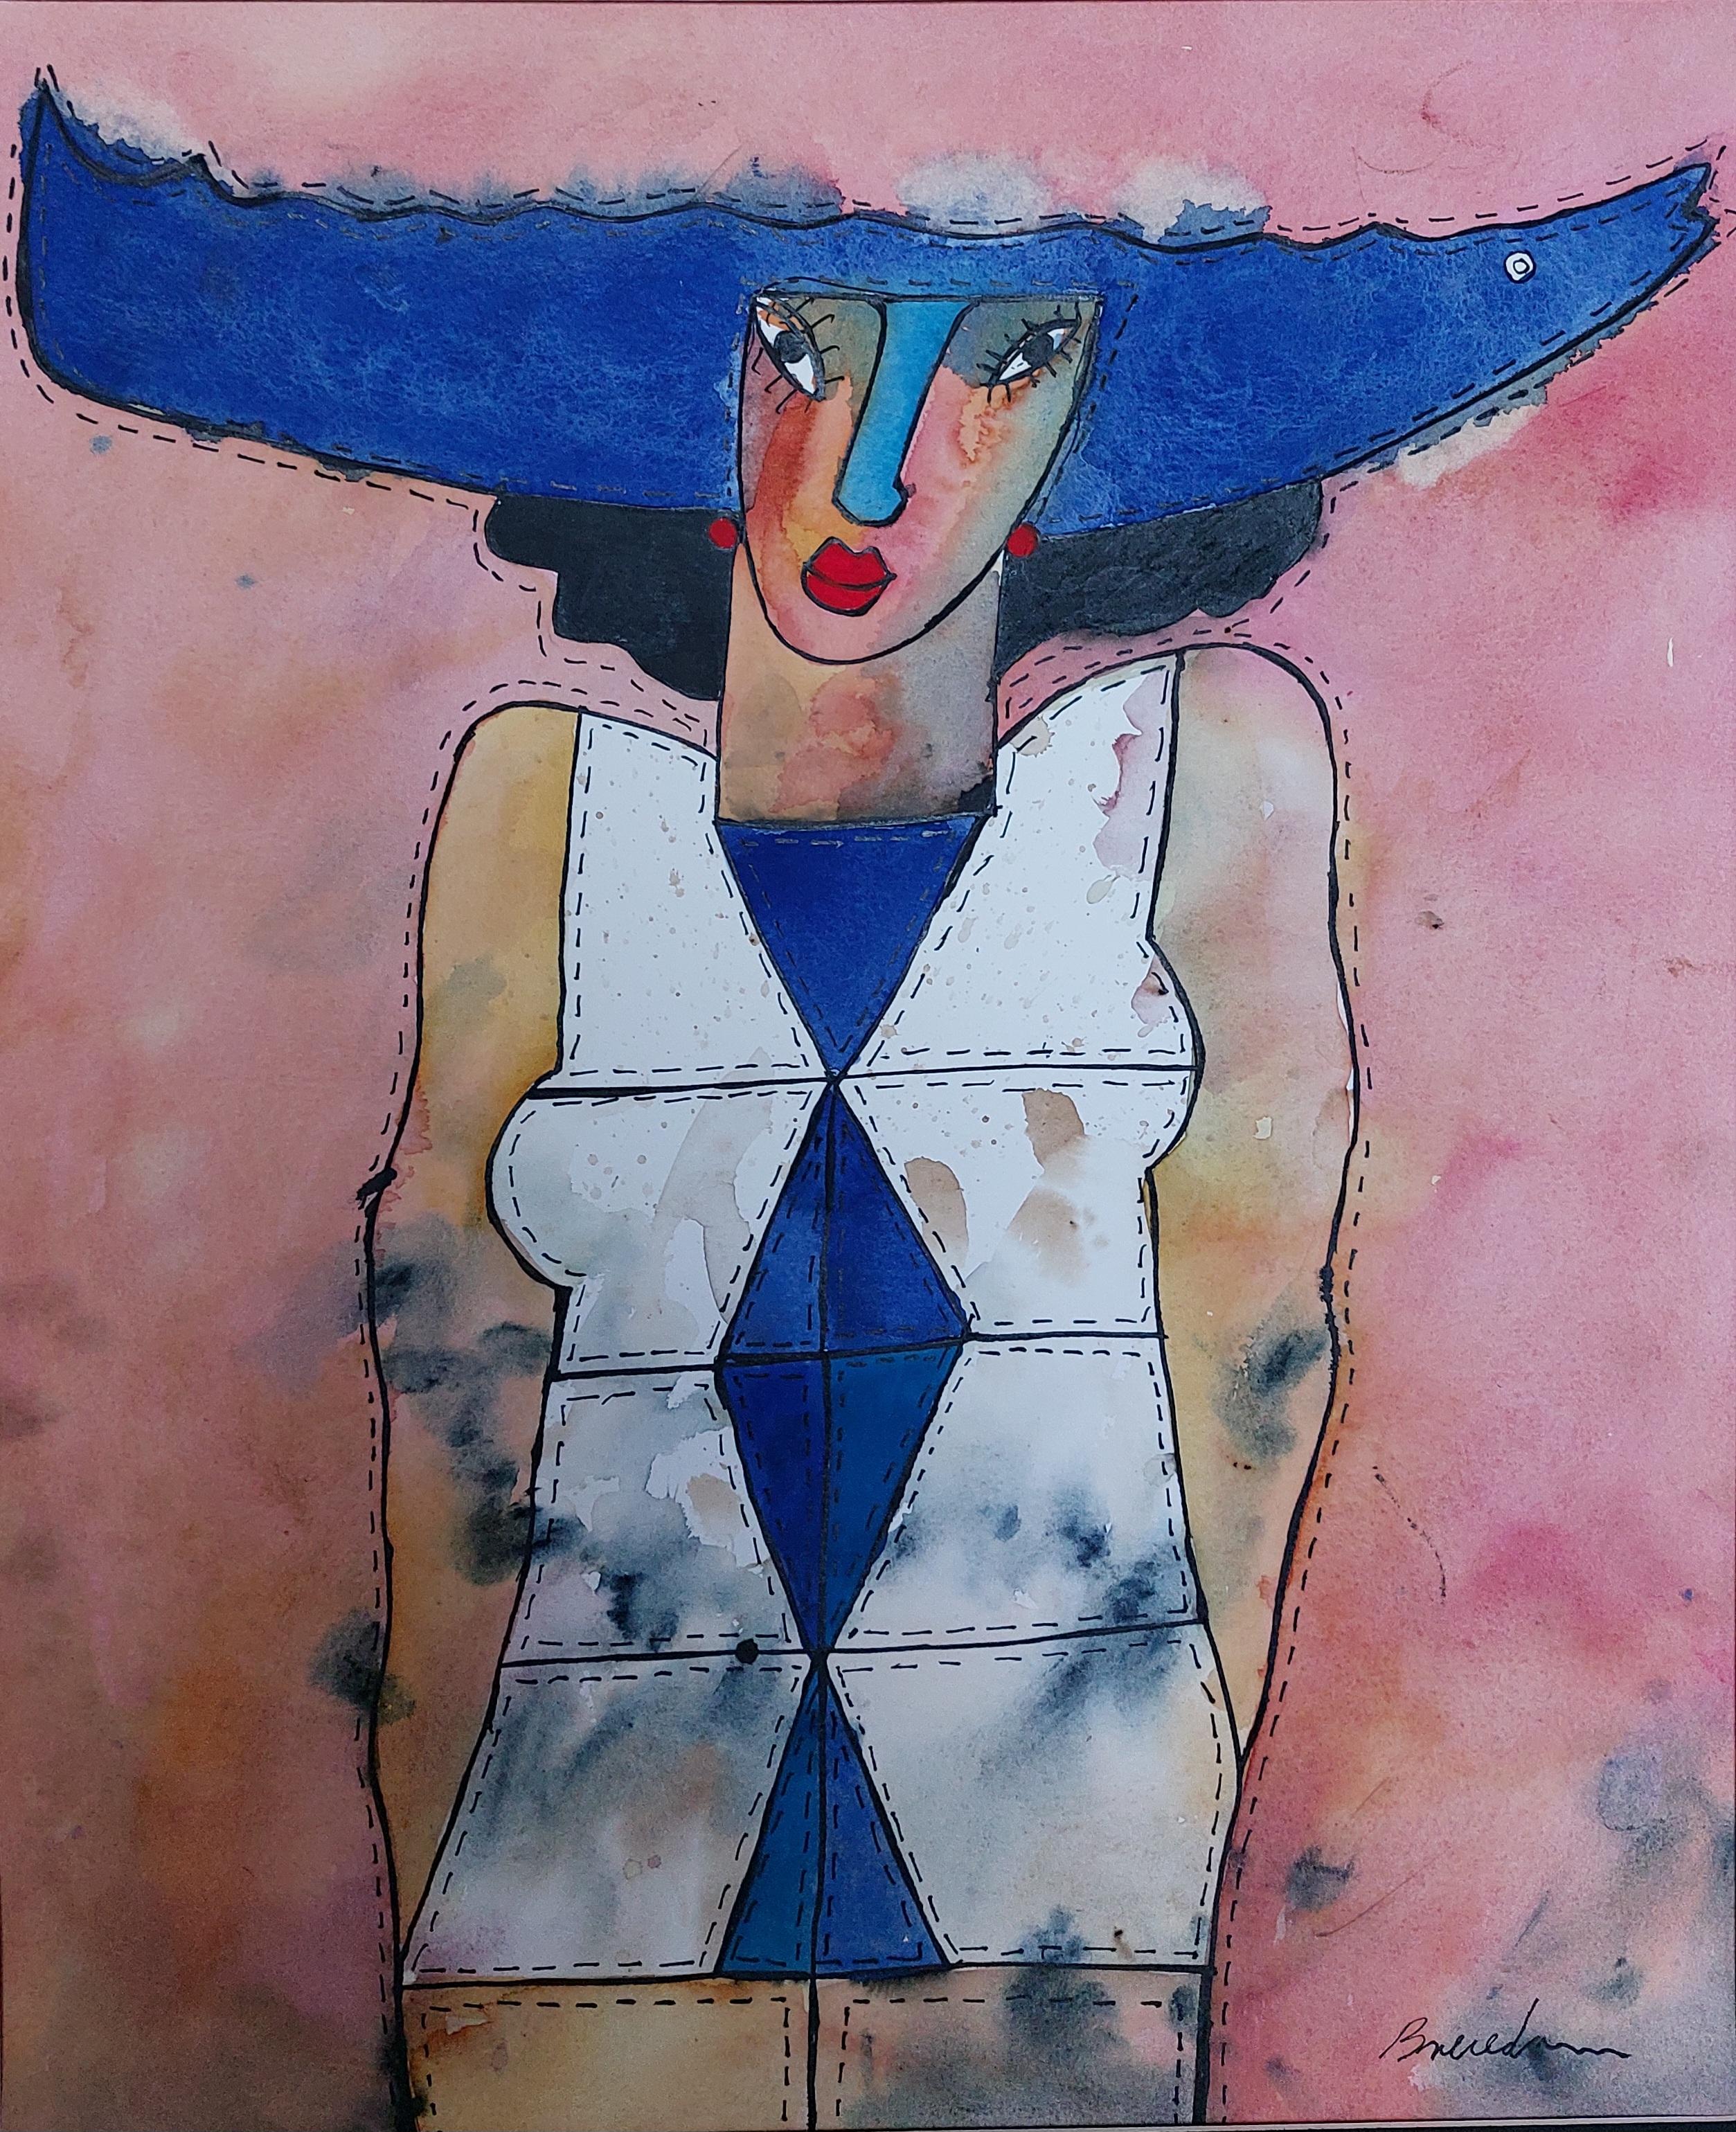 HADA AZUL, watercolor on paper 60 cm x 50 cm